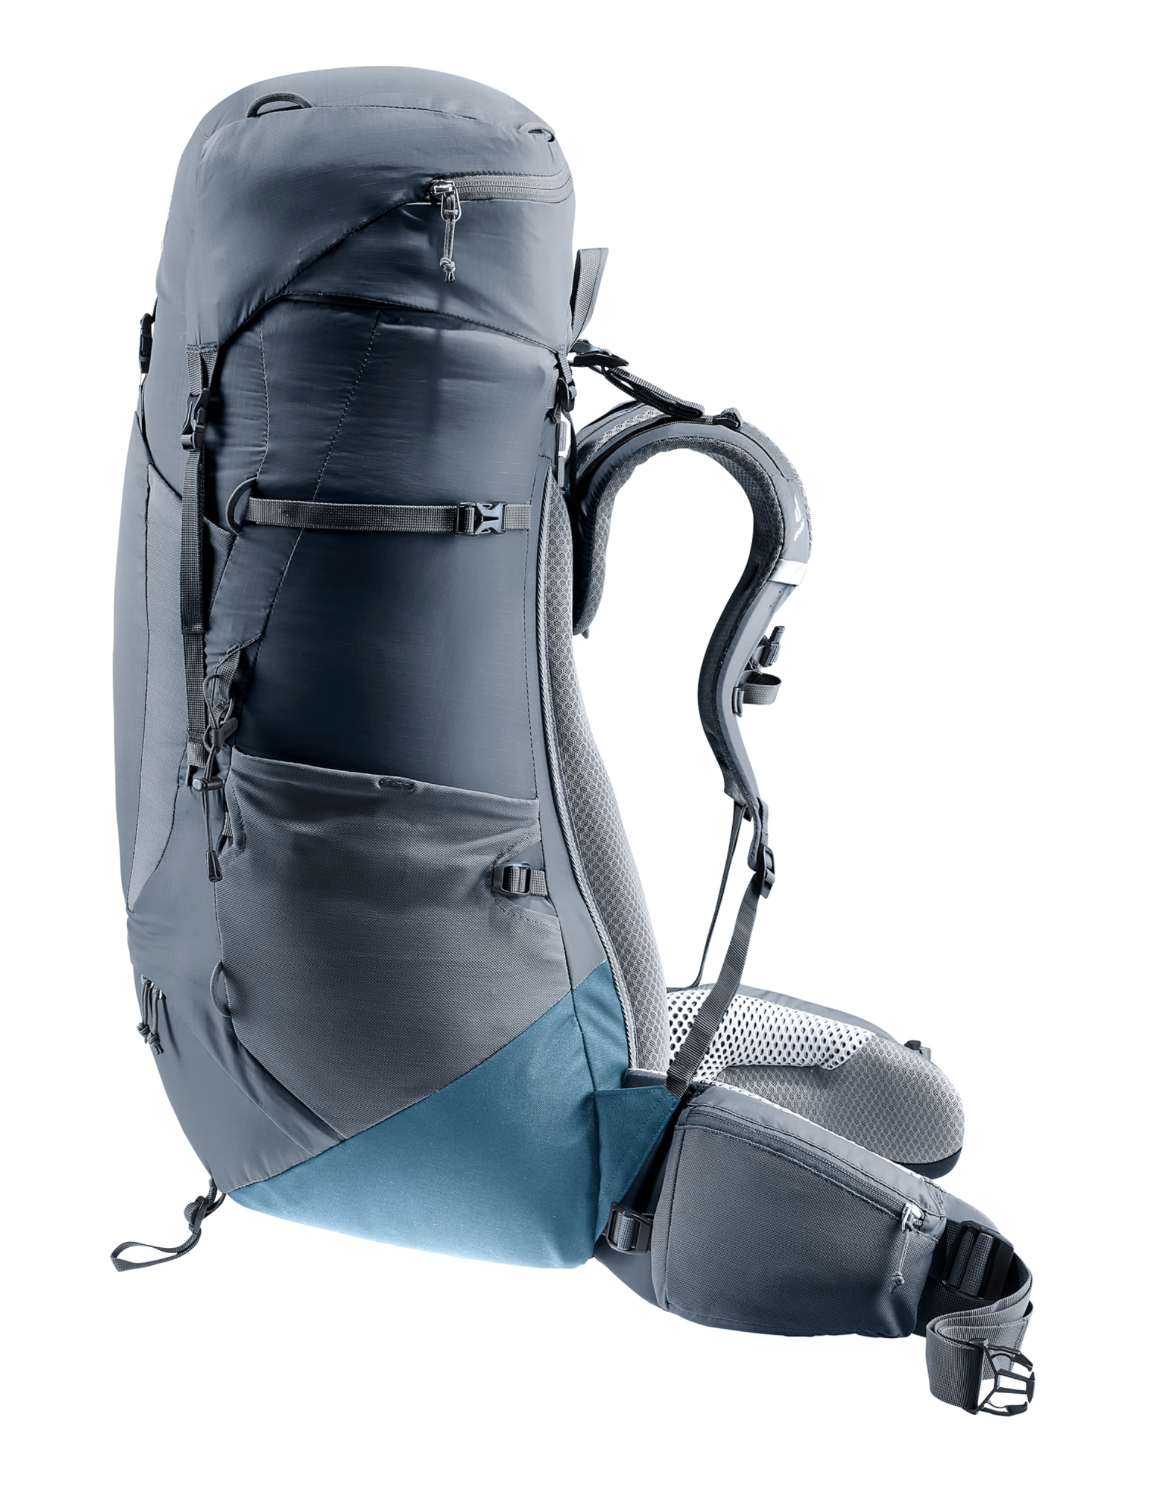 Deuter AirContact Lite 50+10 Men's Hiking Backpack